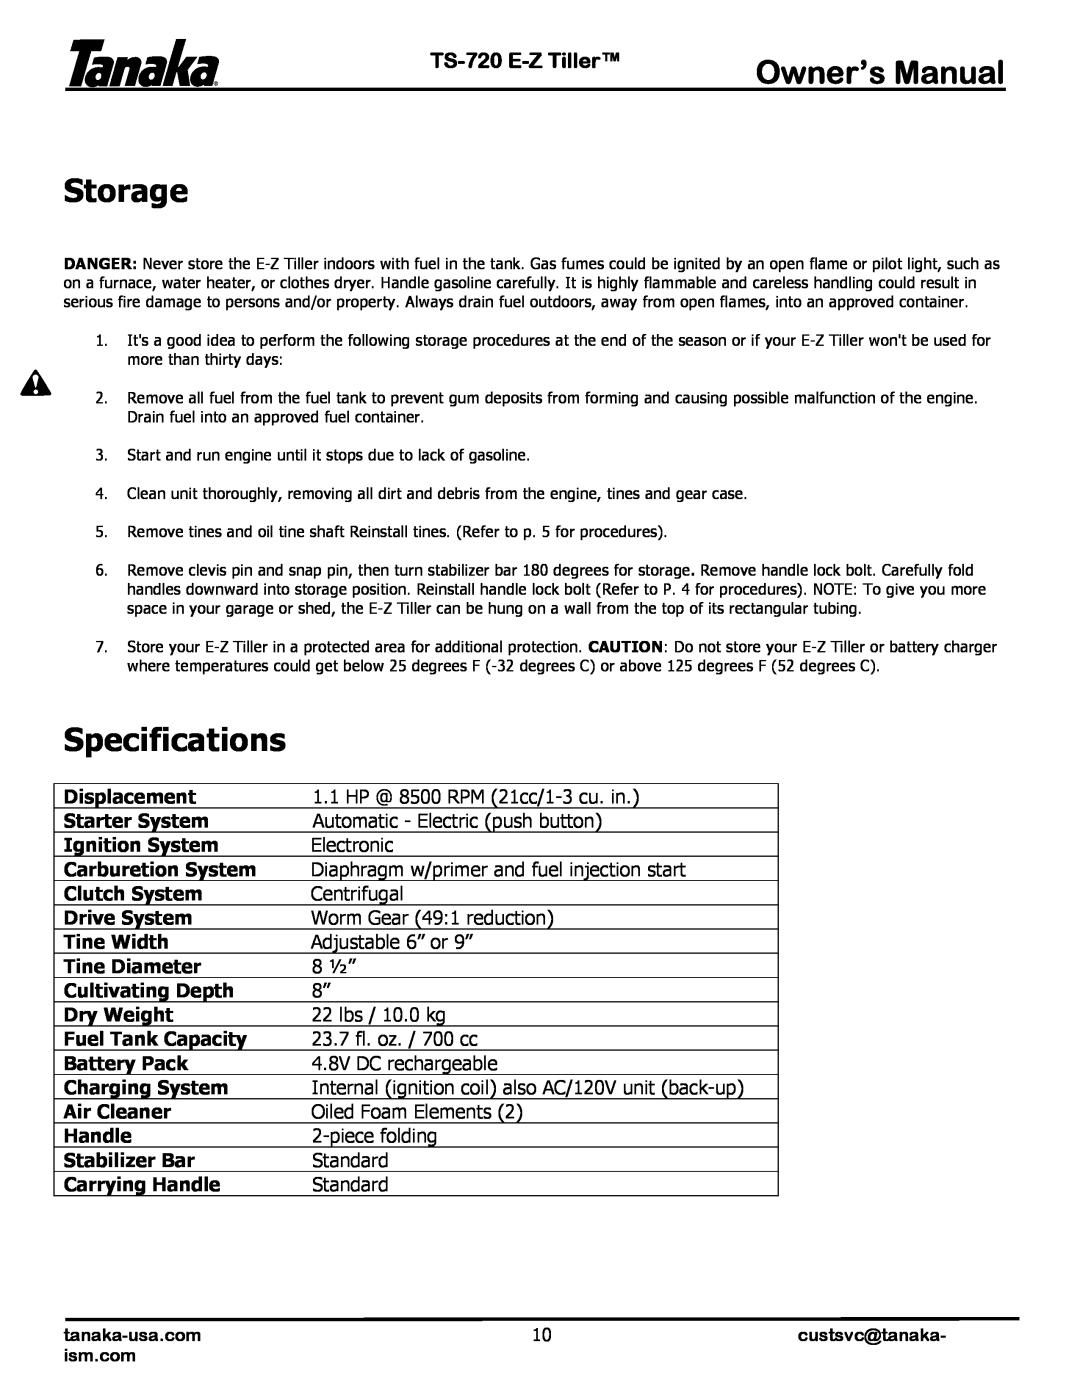 Tanaka manual Storage, Specifications, TS-720 E-ZTiller 